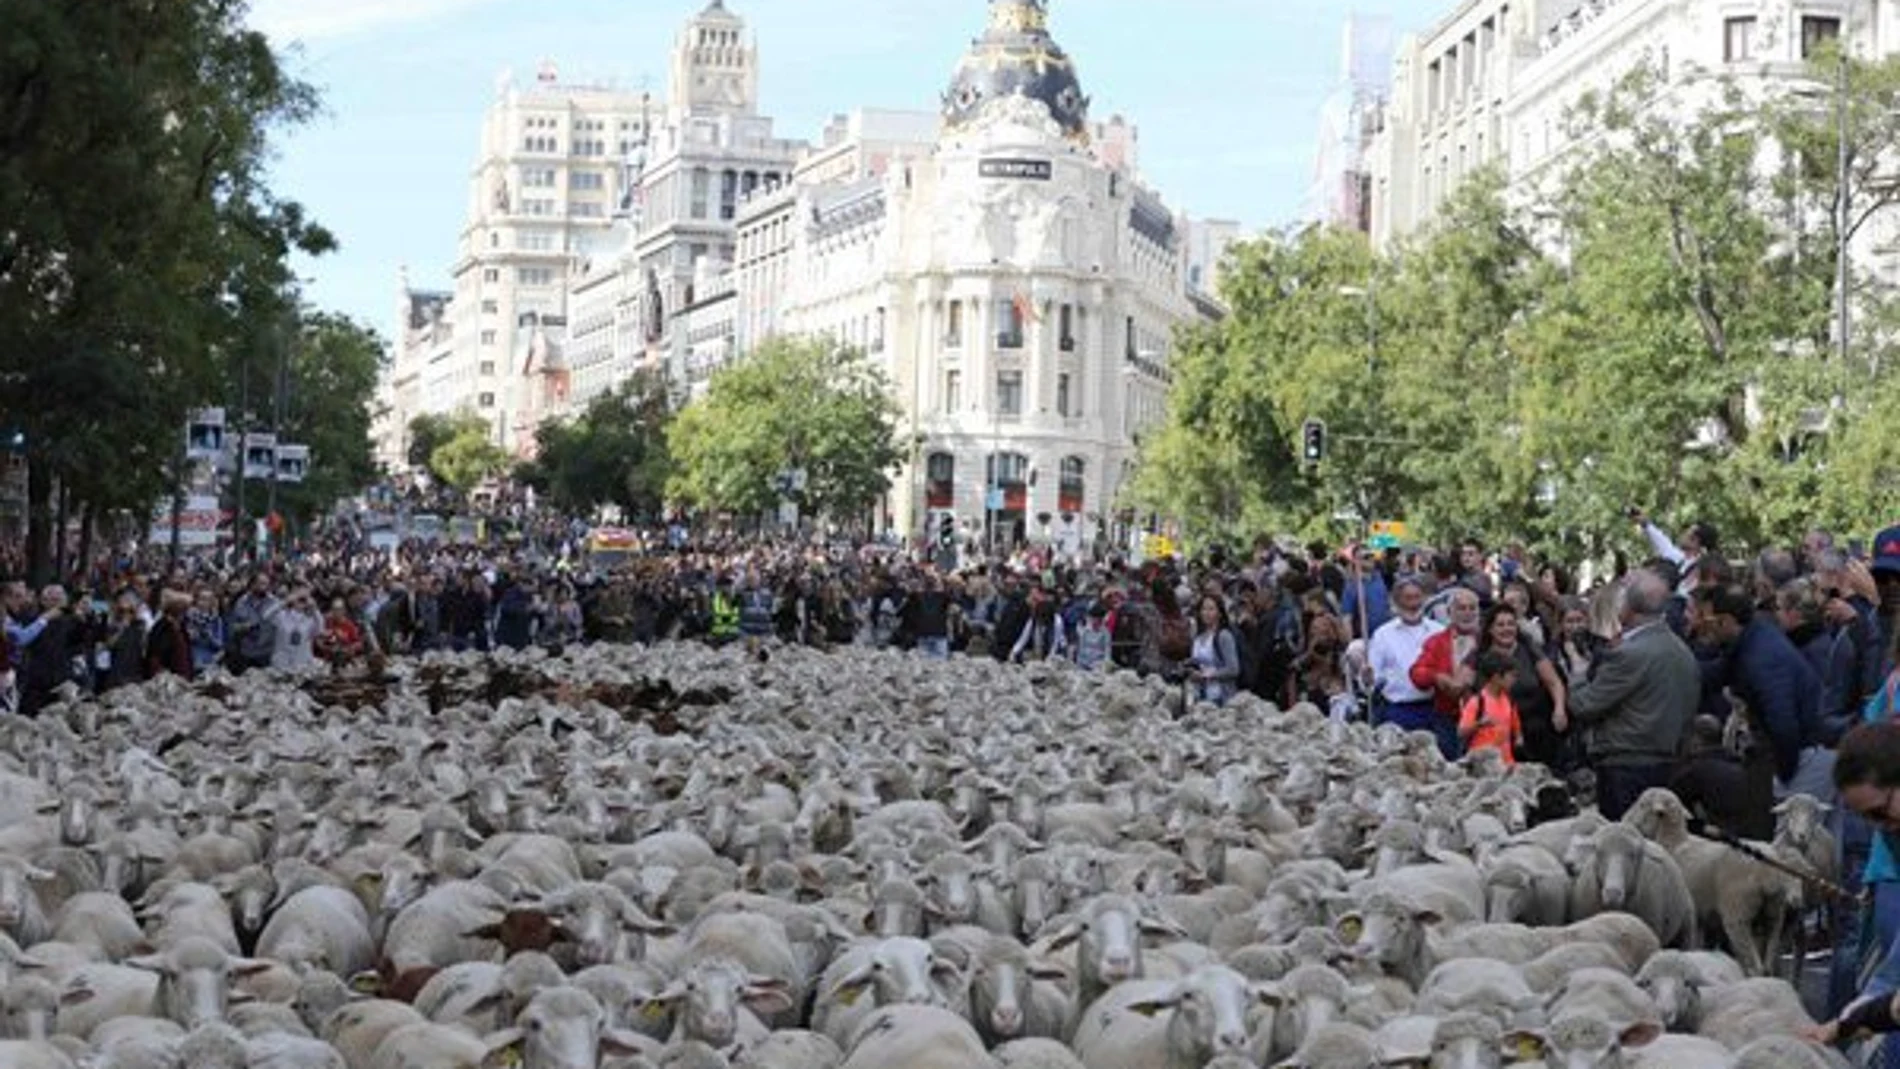 El domingo Madrid acoge la Fiesta de la Trashumancia